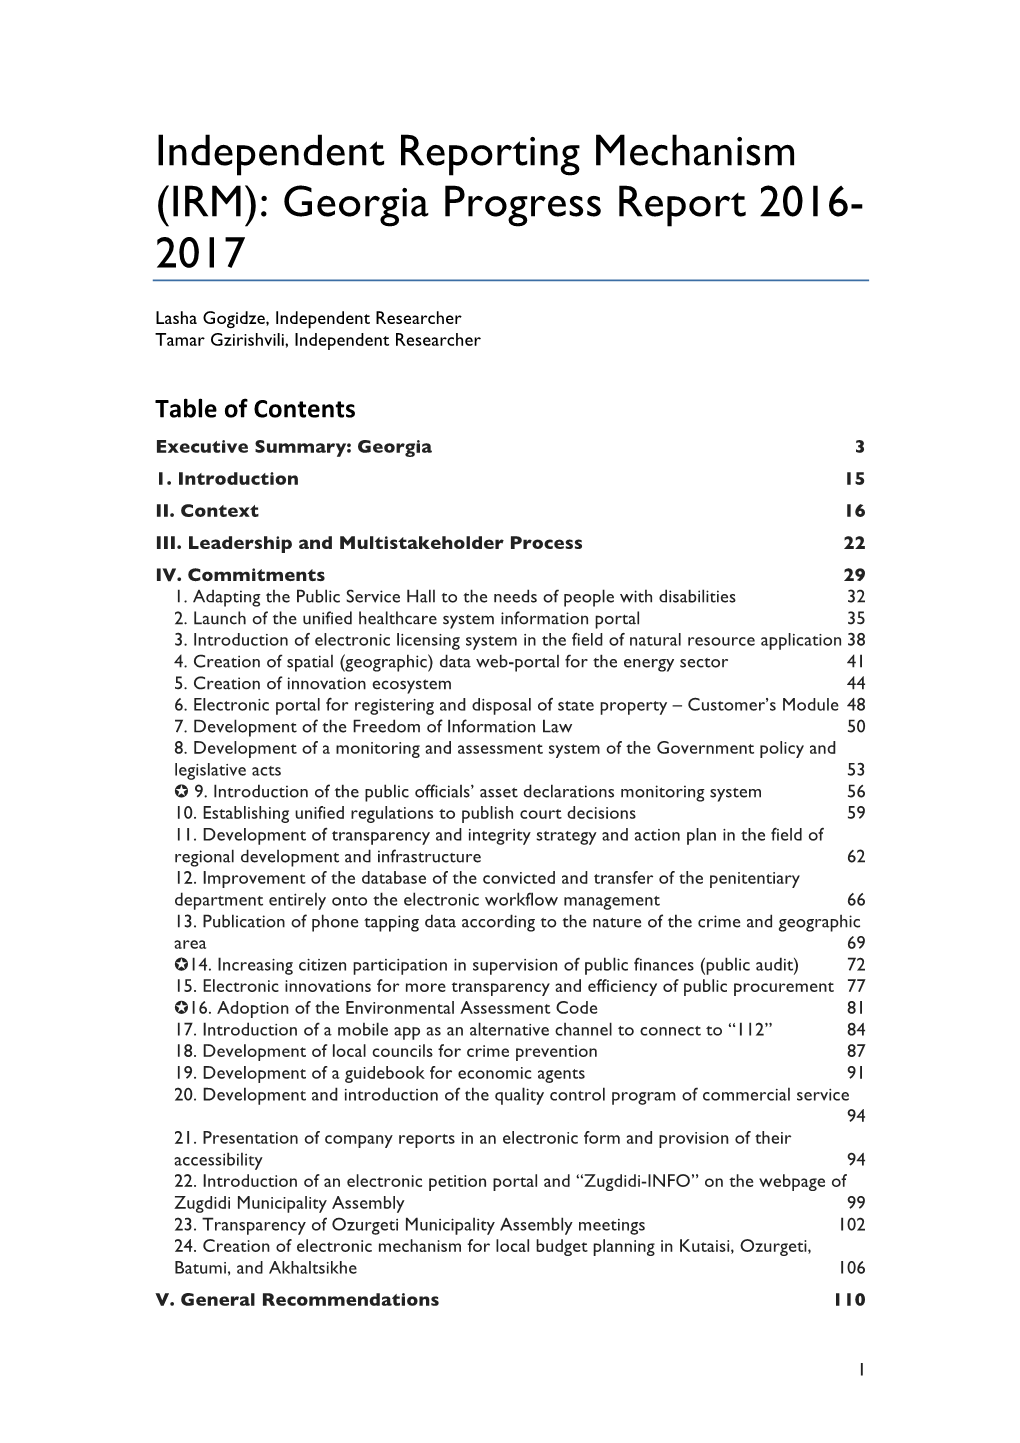 Independent Reporting Mechanism (IRM): Georgia Progress Report 2016- 2017